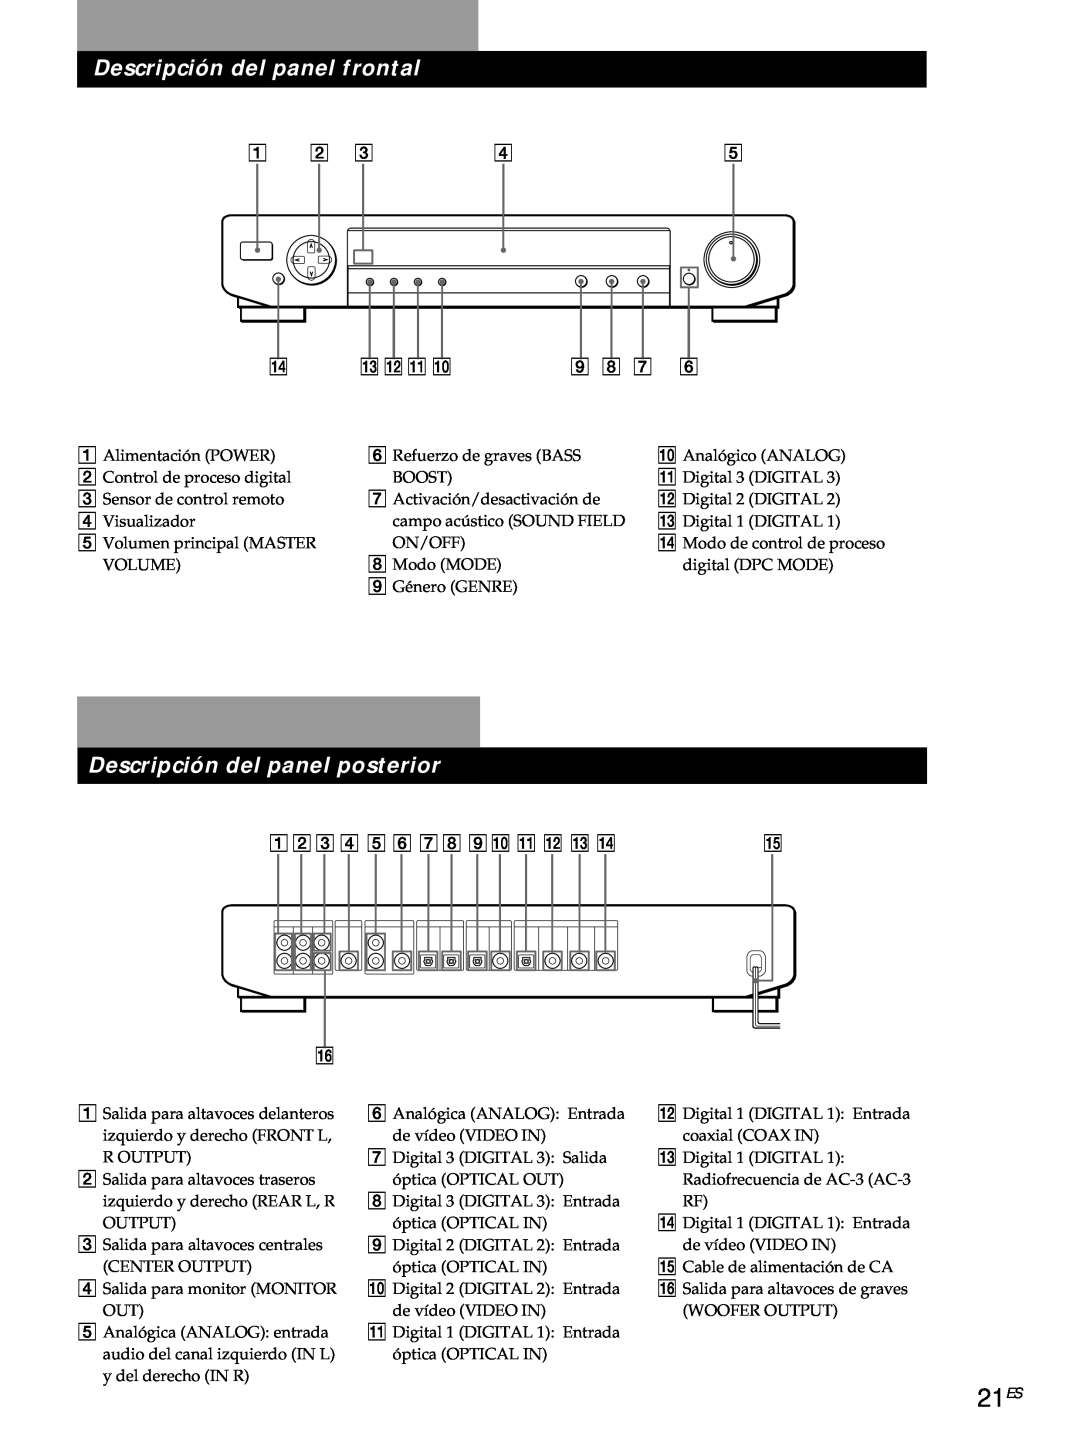 Sony SDP-E800 operating instructions 21ES, Descripción del panel frontal, Descripción del panel posterior 